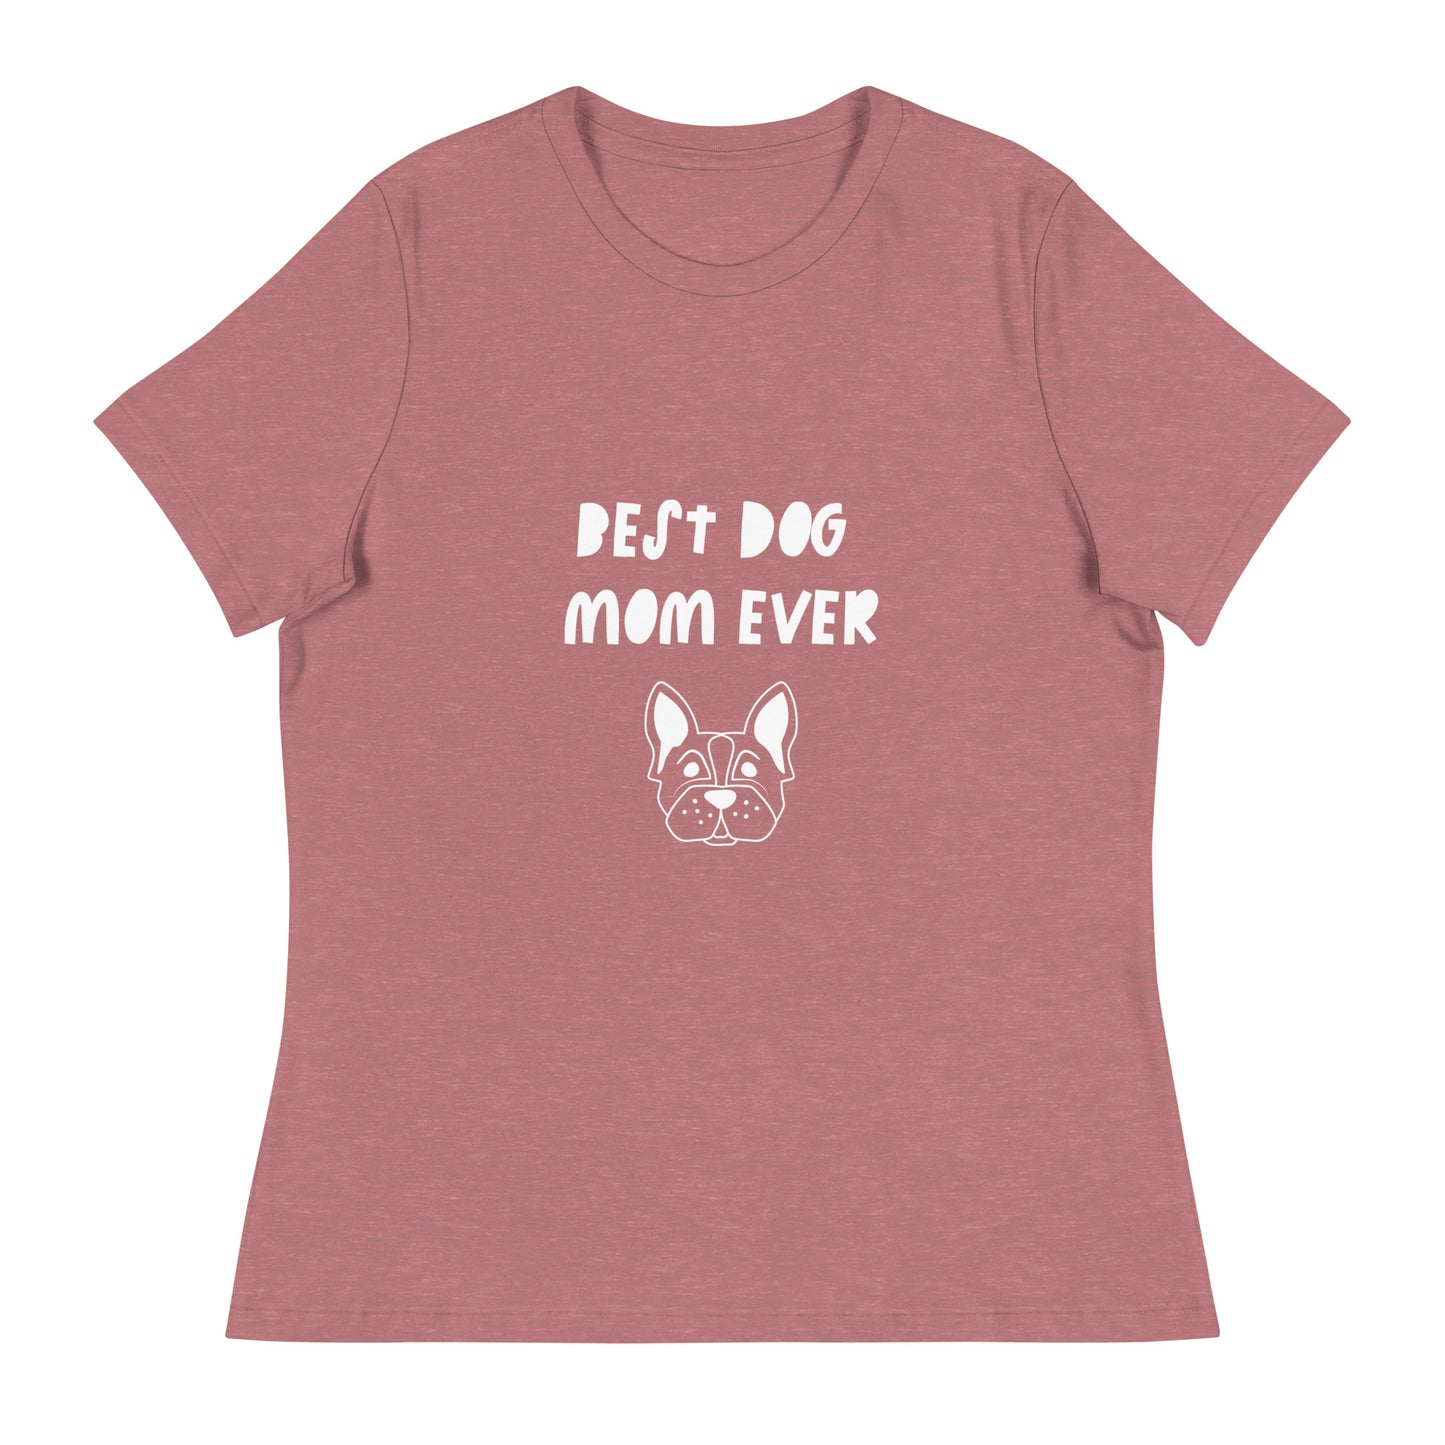 Best Dog Mom Ever Printed T-Shirt